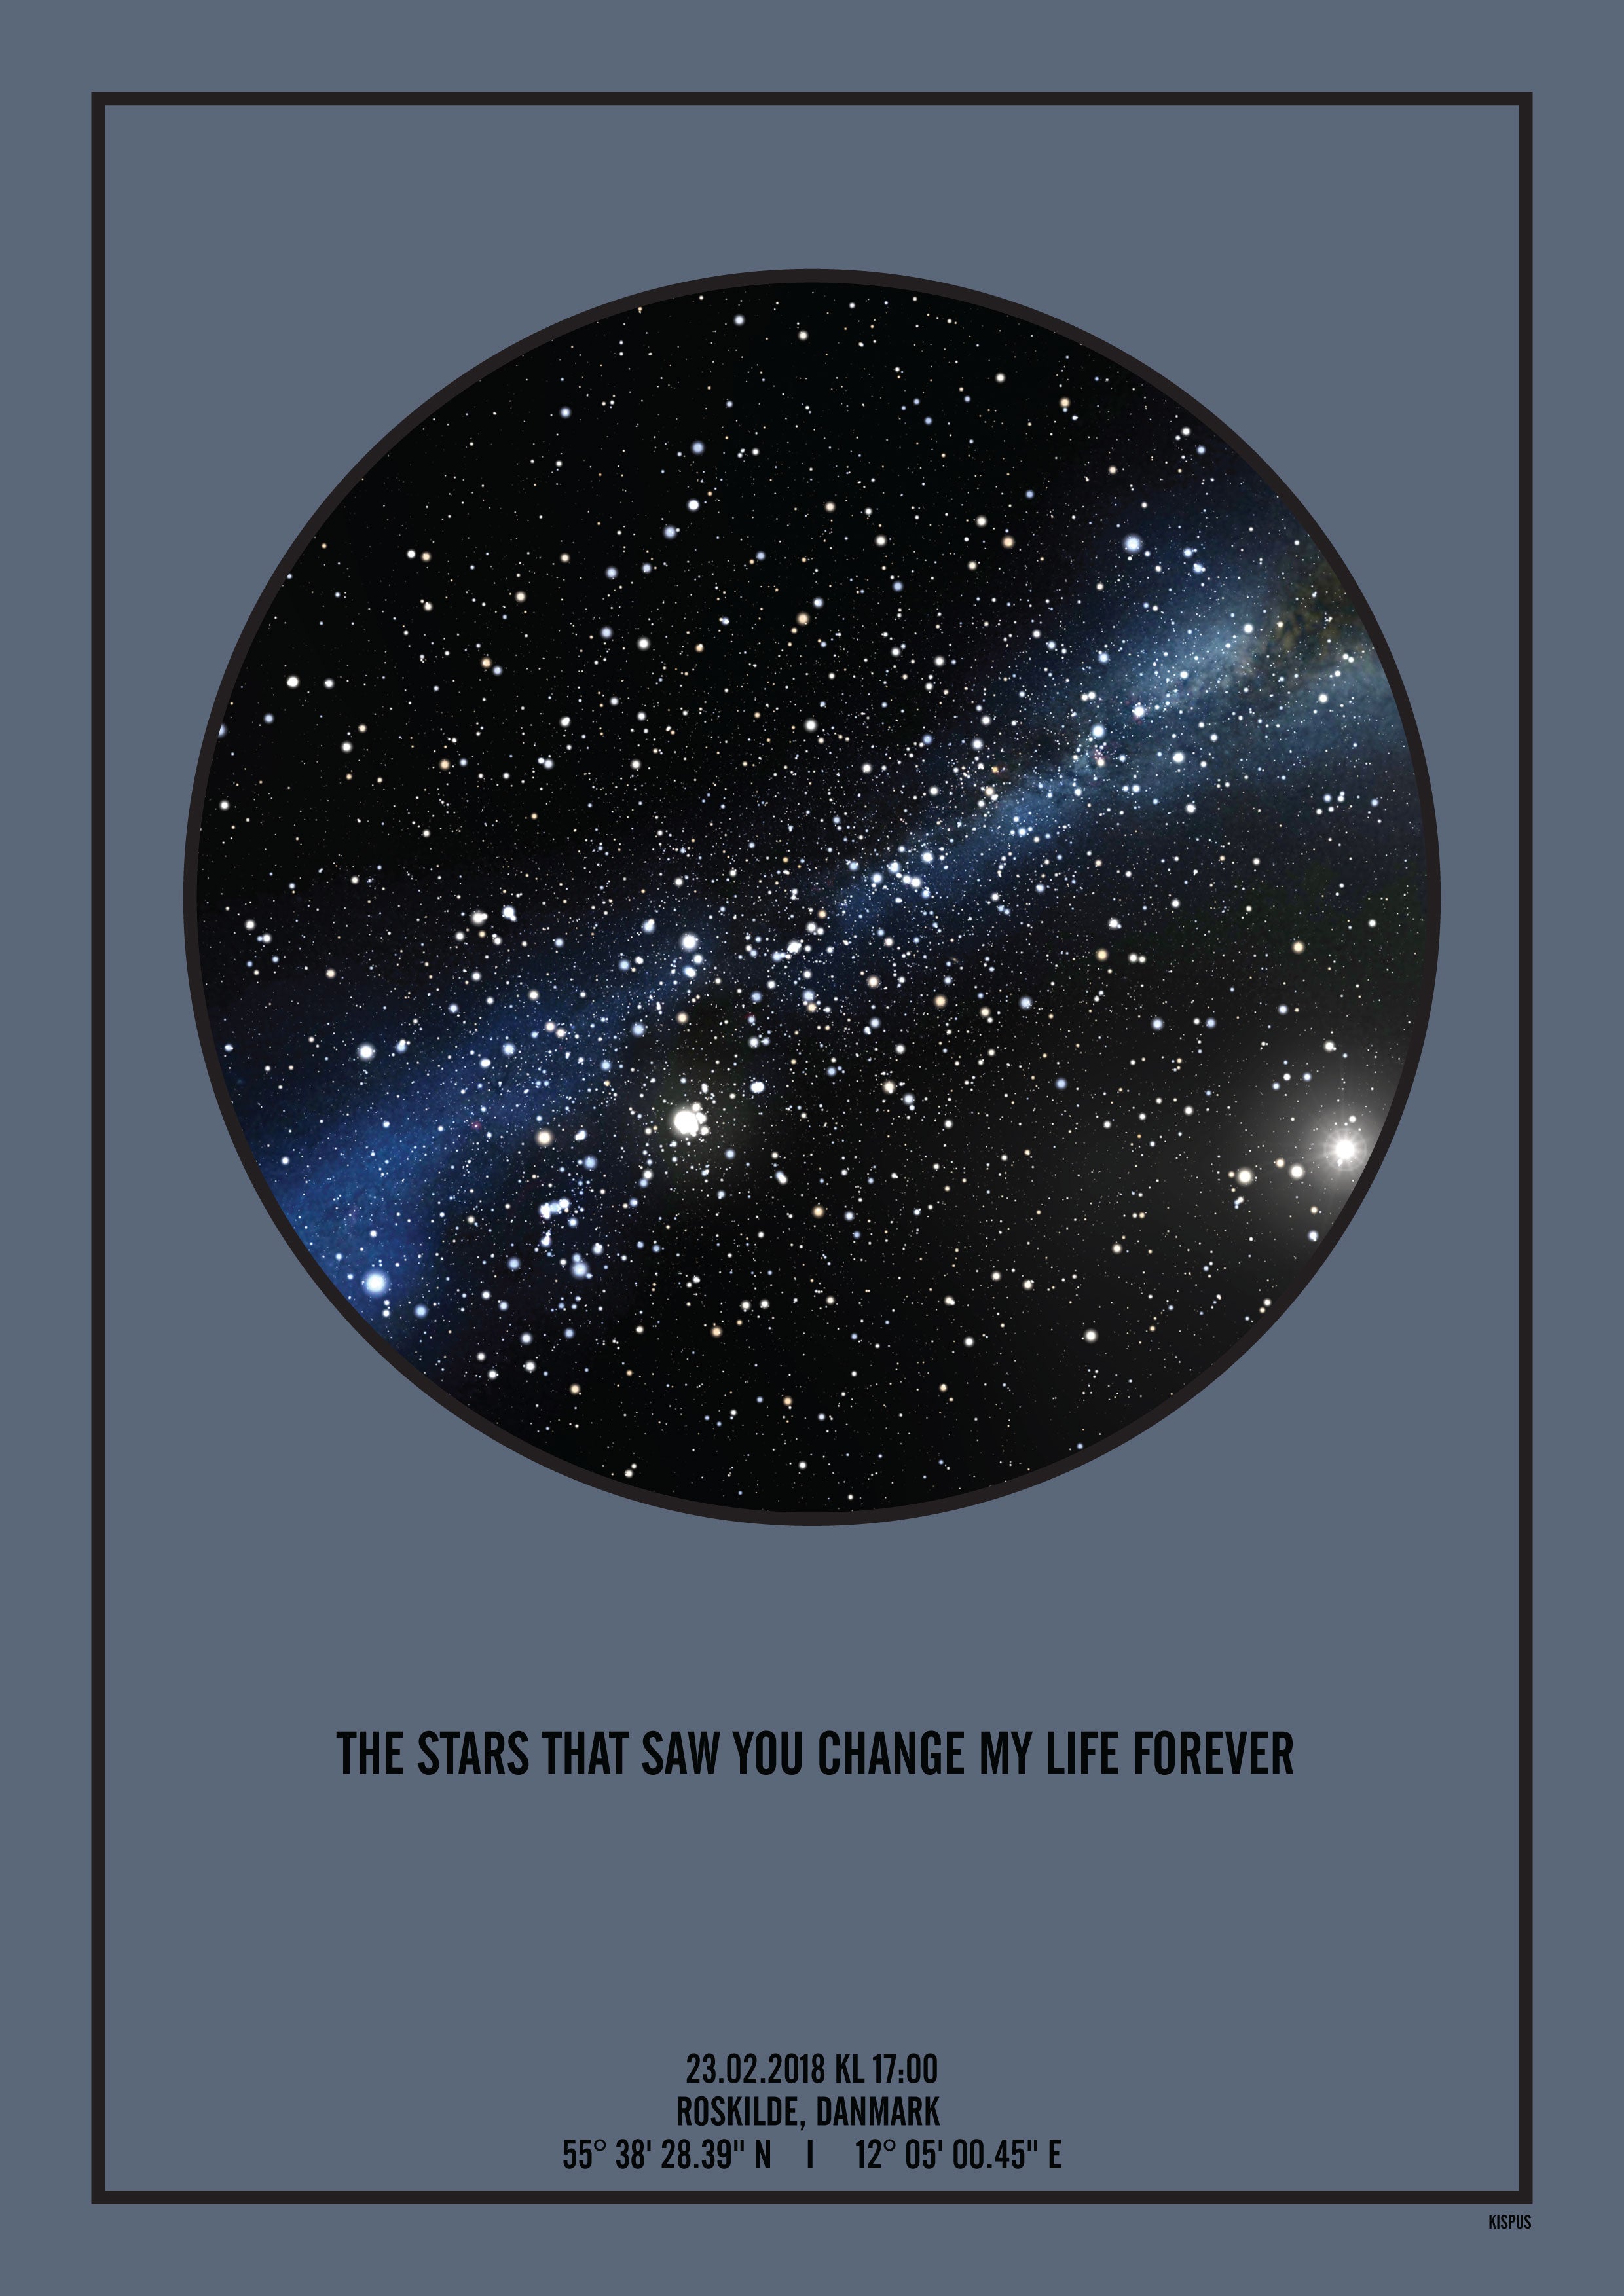 Se PERSONLIG STJERNEHIMMEL PLAKAT (BLÅGRÅ) - 50x70 / Sort tekst og sort stjernehimmel / Stjernehimmel med Mælkevej hos KISPUS